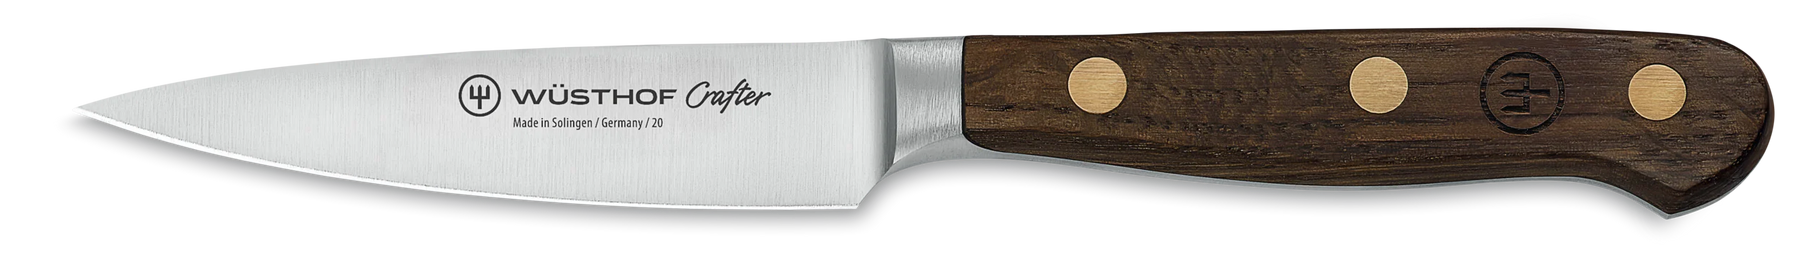 Wusthof Crafter 7-Piece Knife Block Set 1090870602